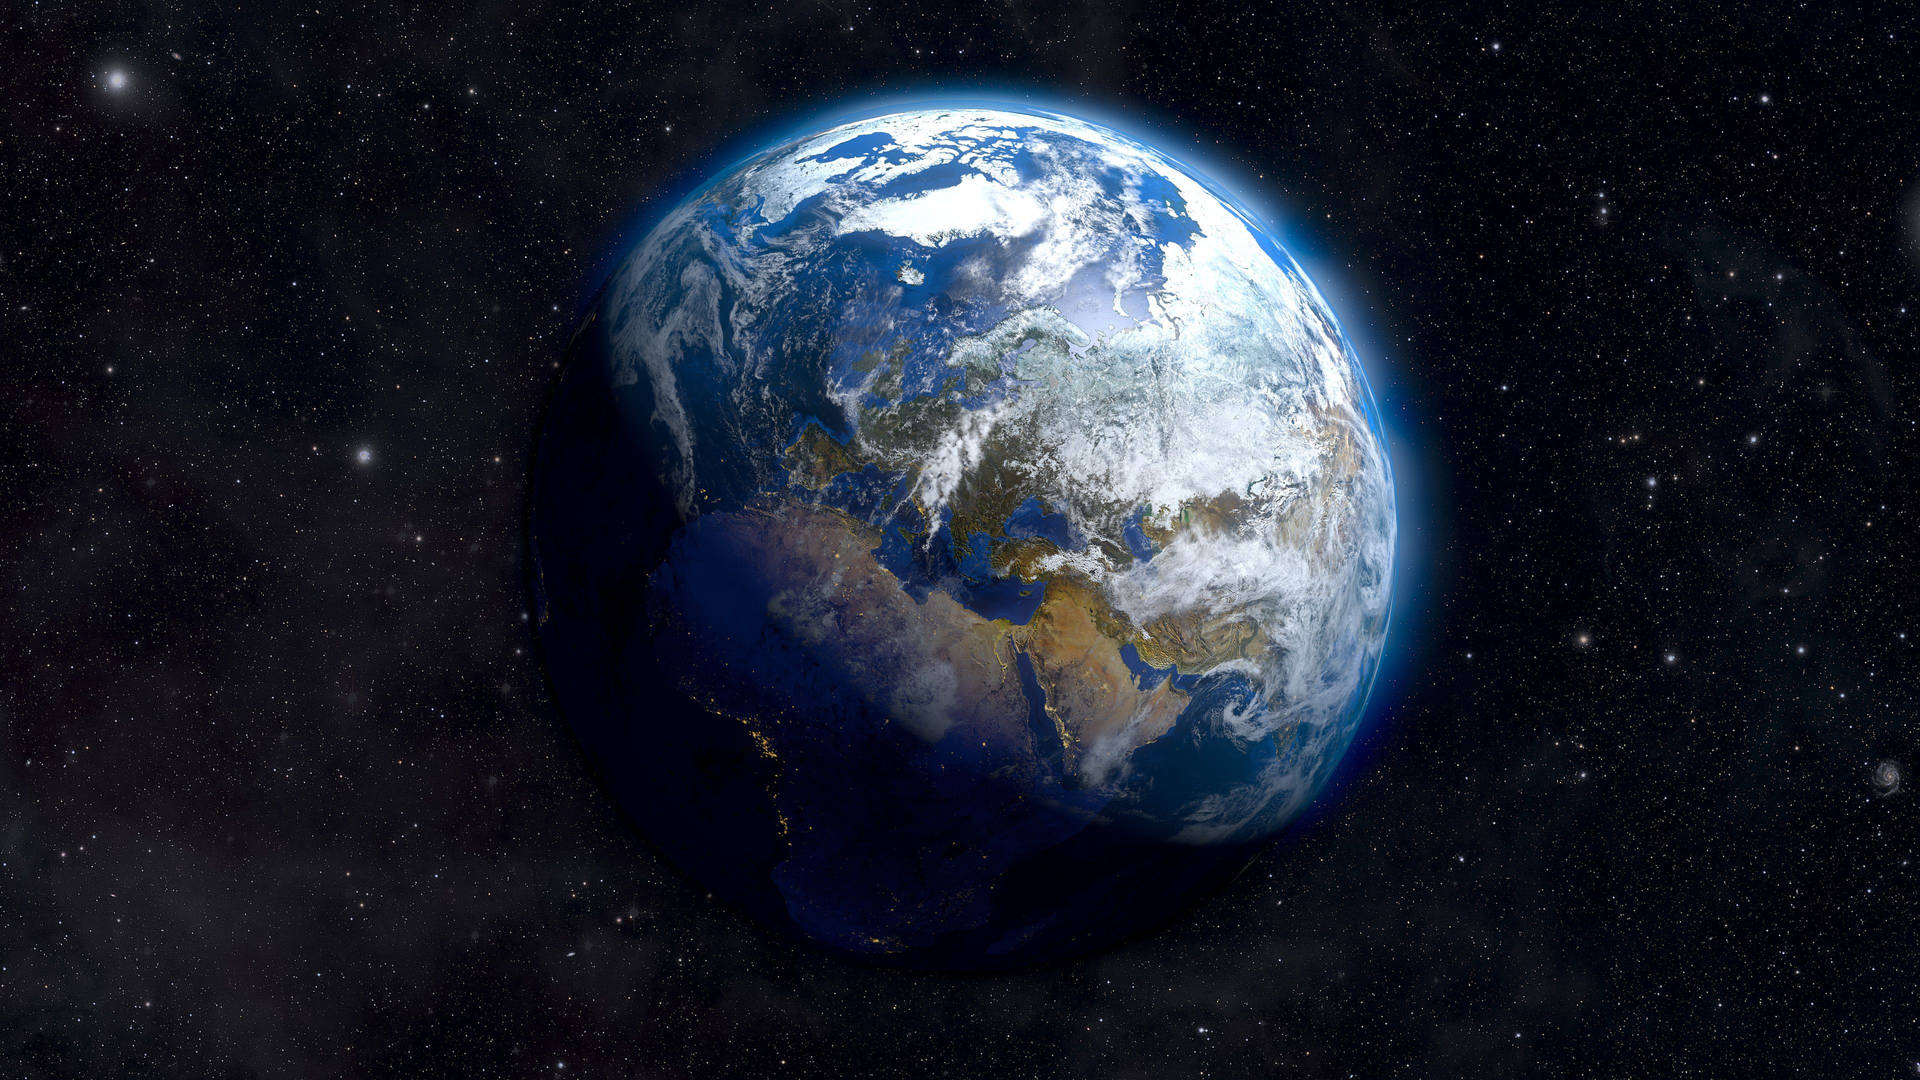 Free 4k Earth Wallpaper Downloads, [100+] 4k Earth Wallpapers for FREE |  